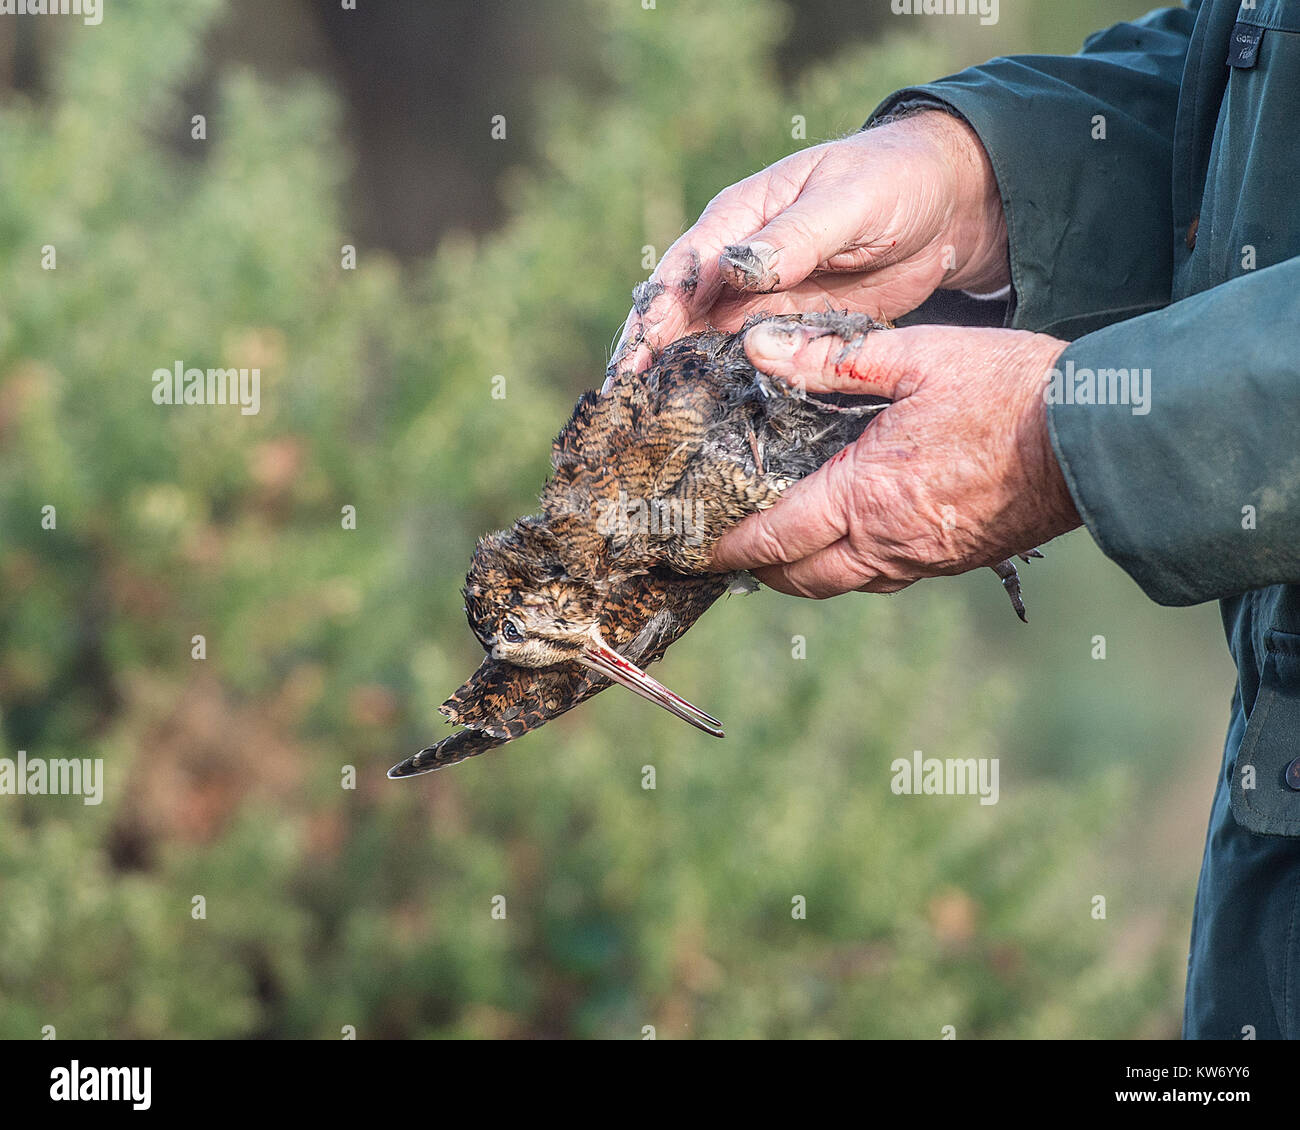 man holding dead woodcock bird Stock Photo